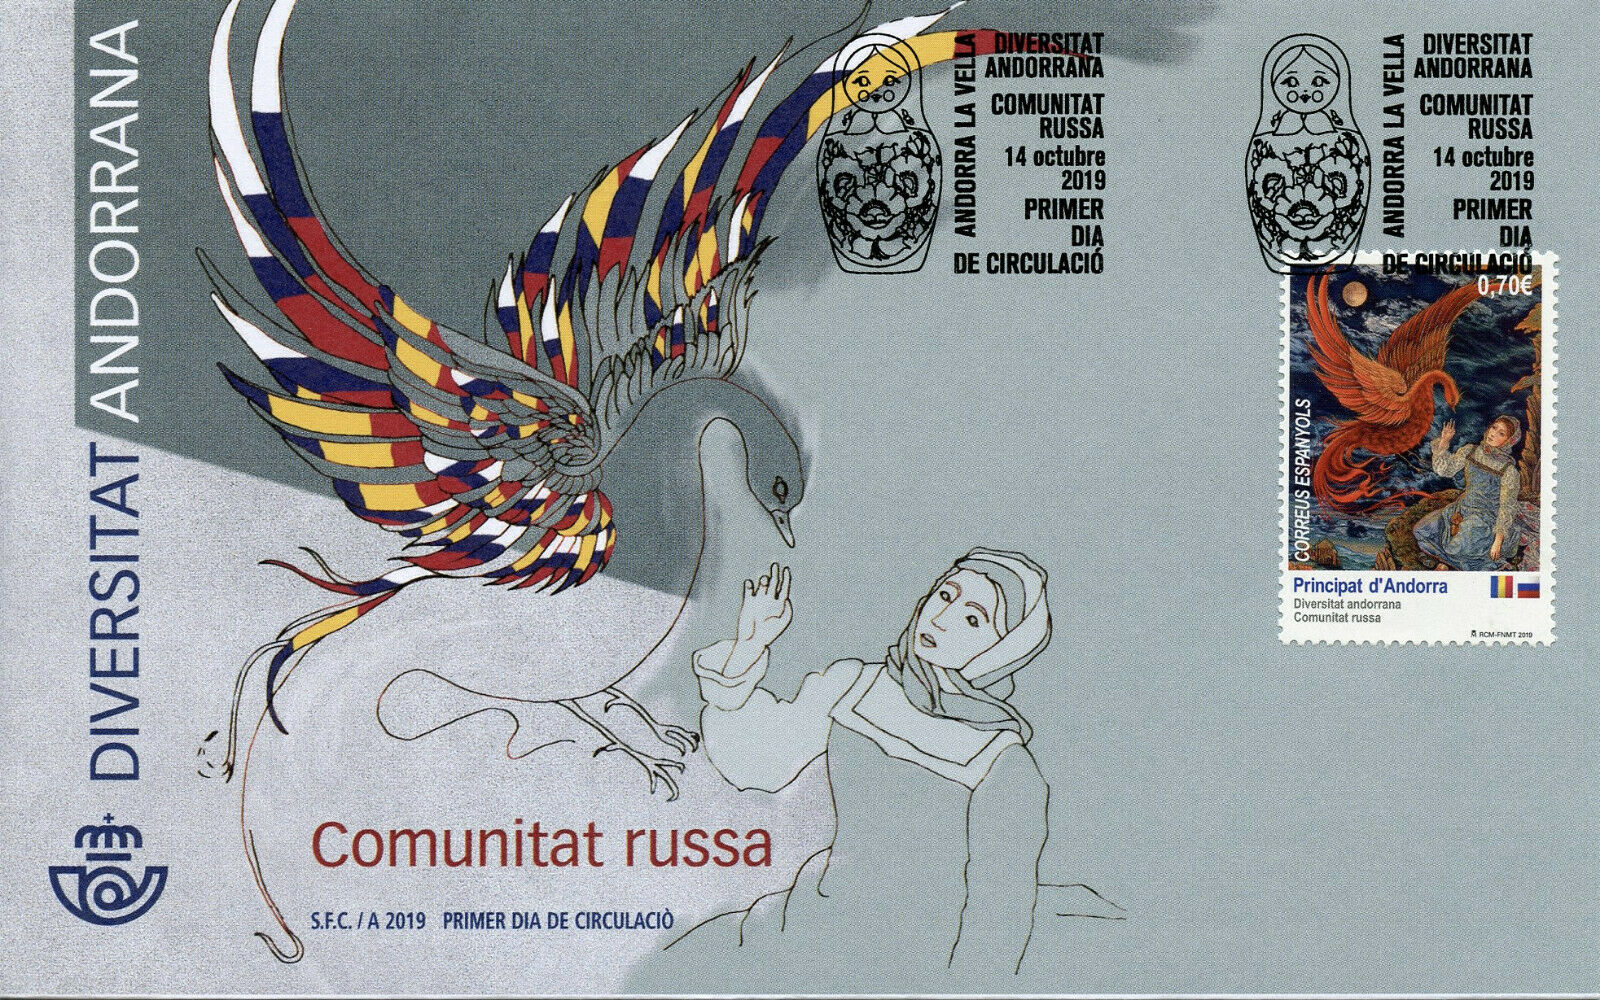 Spanish Andorra Art Stamps 2019 FDC Russian Community Diversity Cultures 1v Set